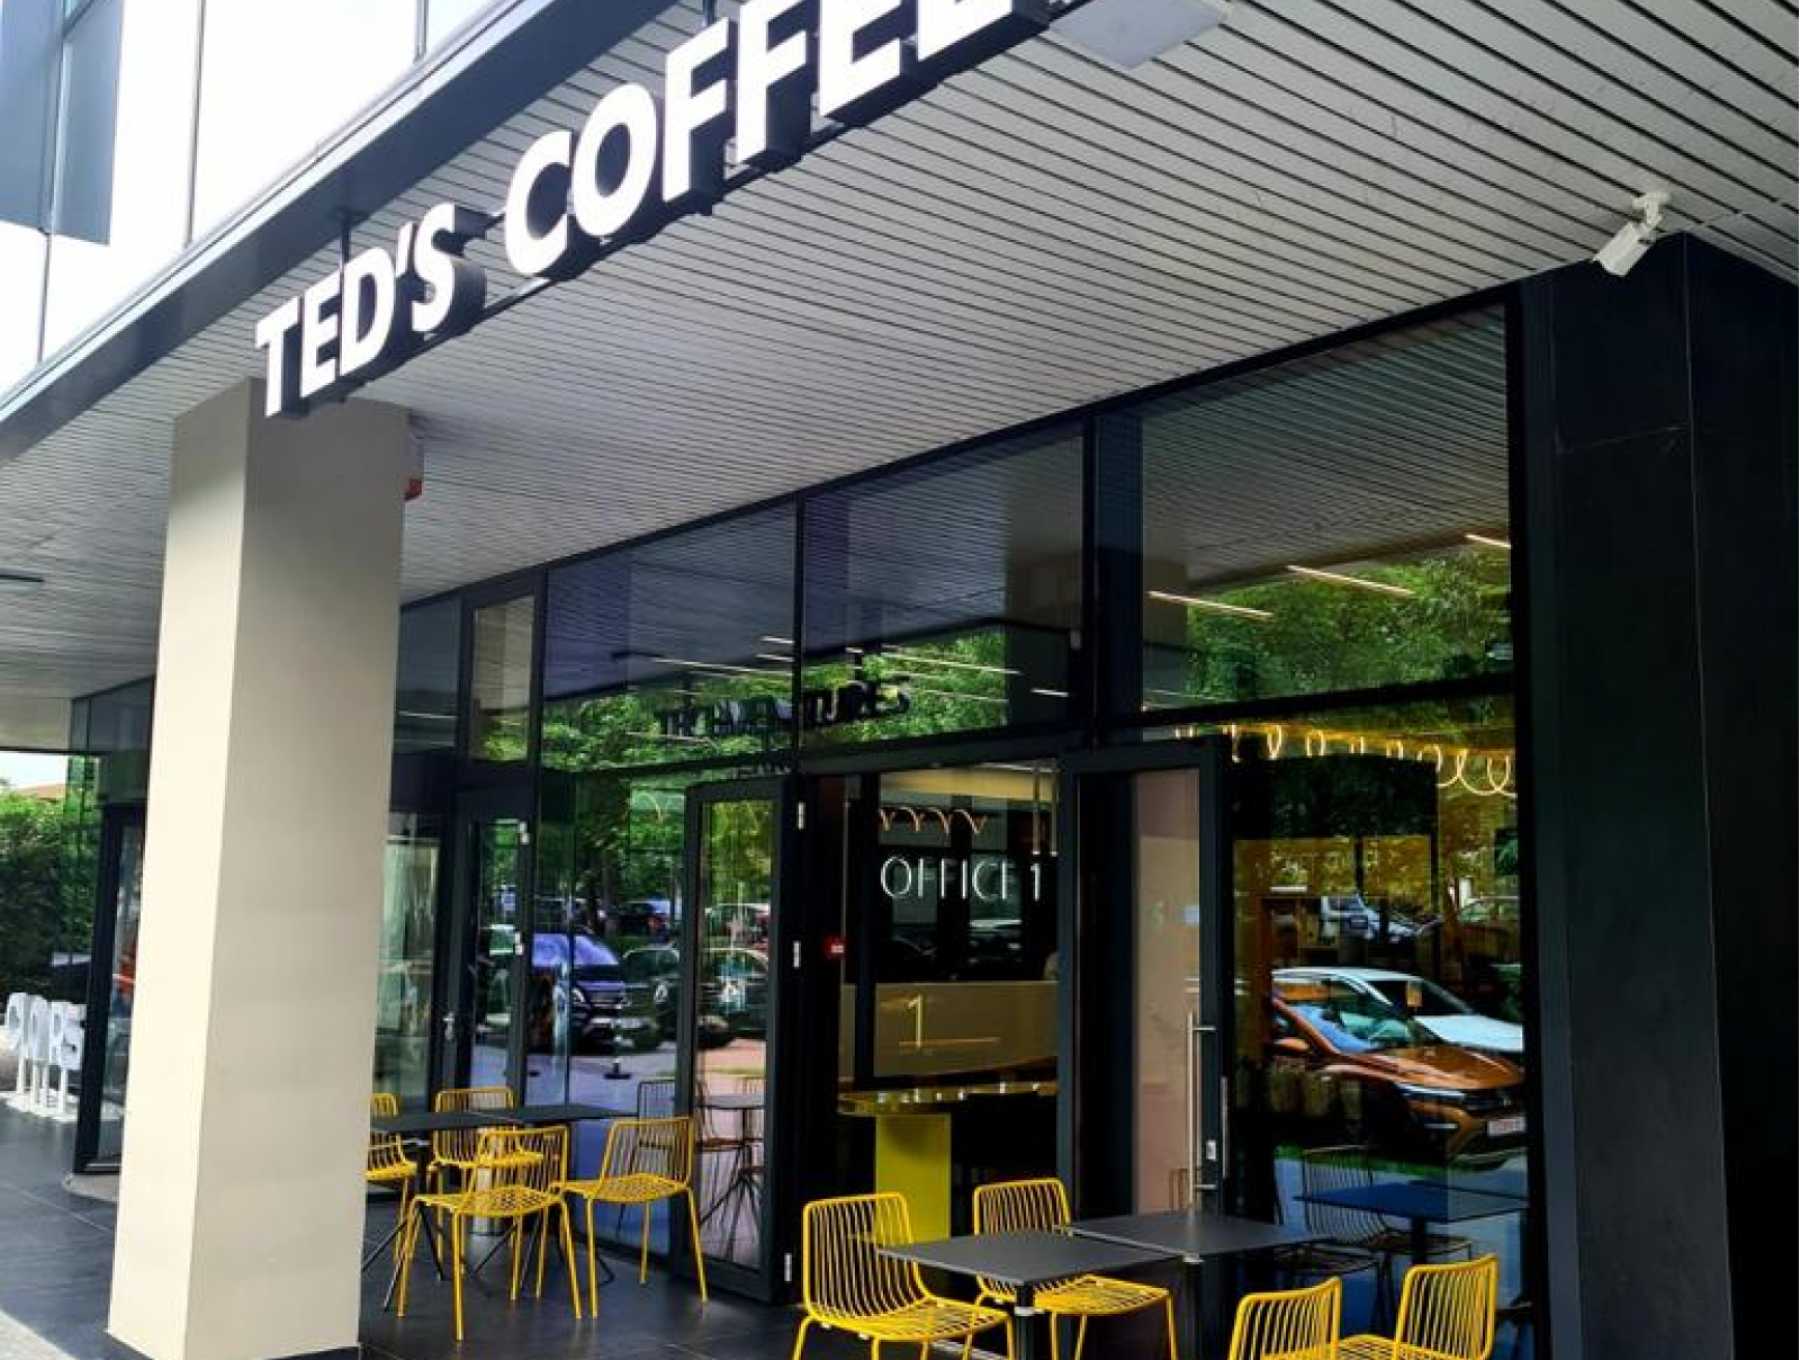 Ted’s Coffee at One Herăstrău Office